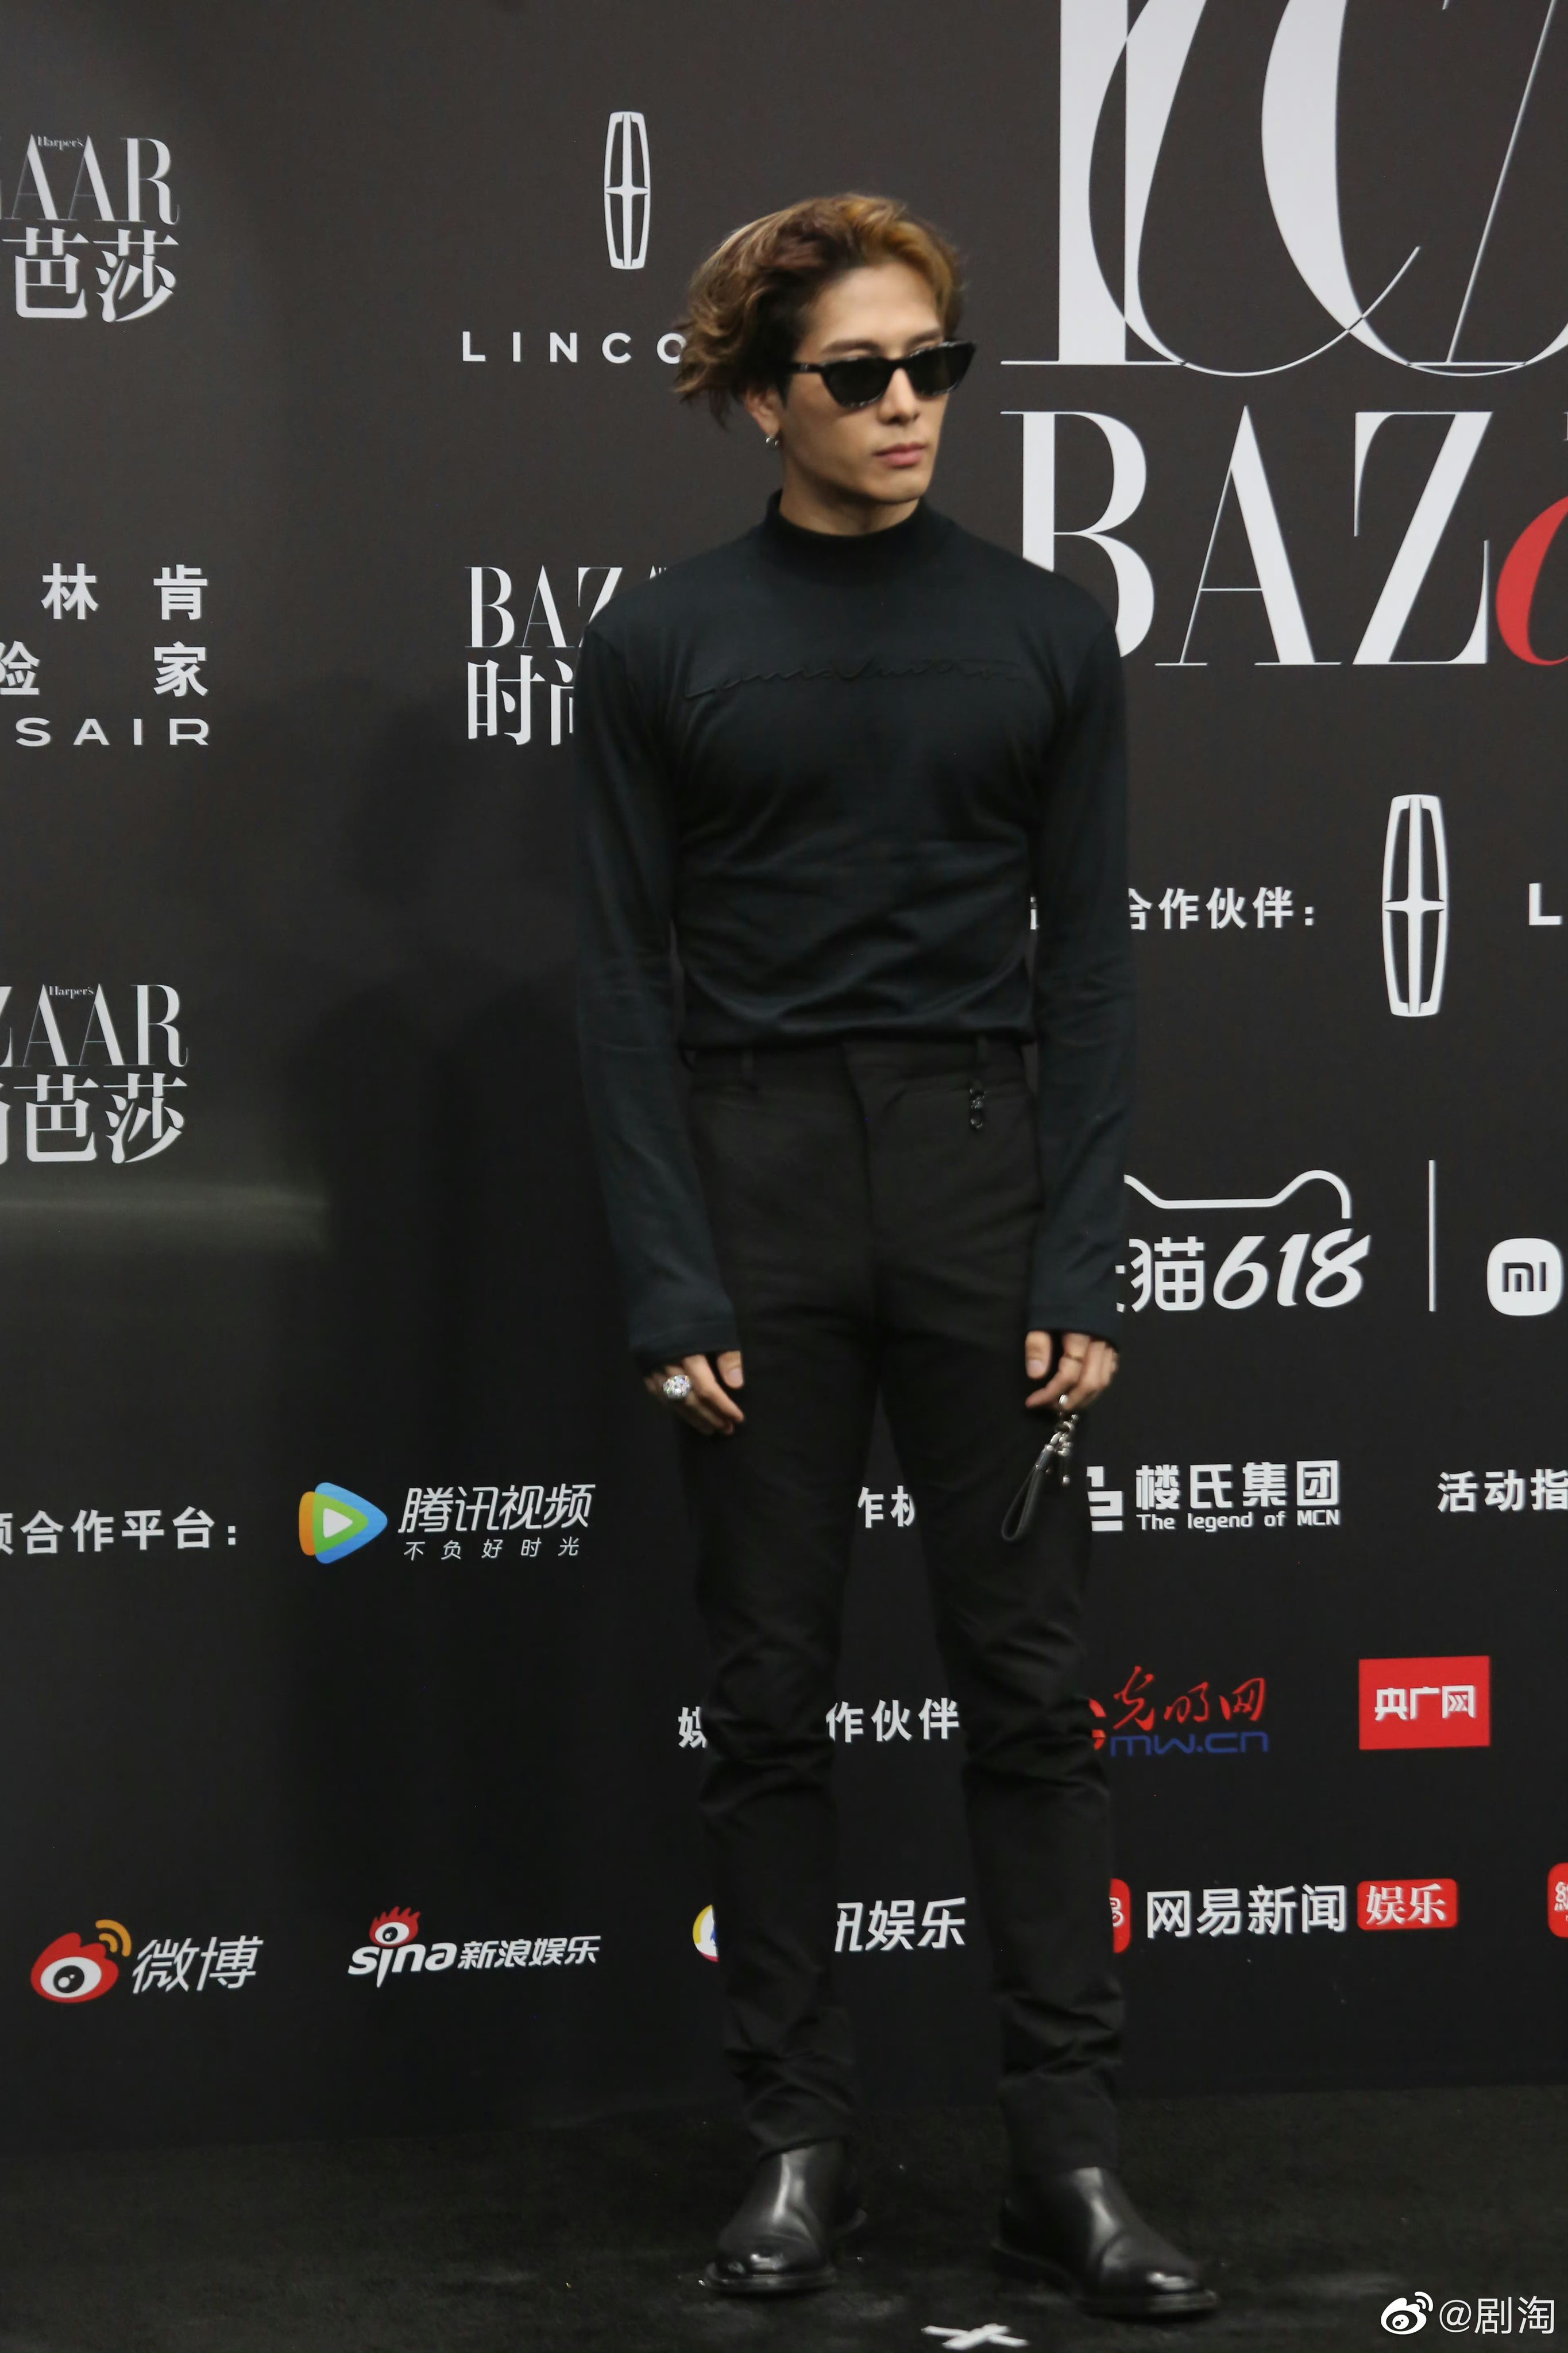 2023.05.31][Weibo] Jackson Wang for Harper's Bazaar ICONS : r/RealTeamWang